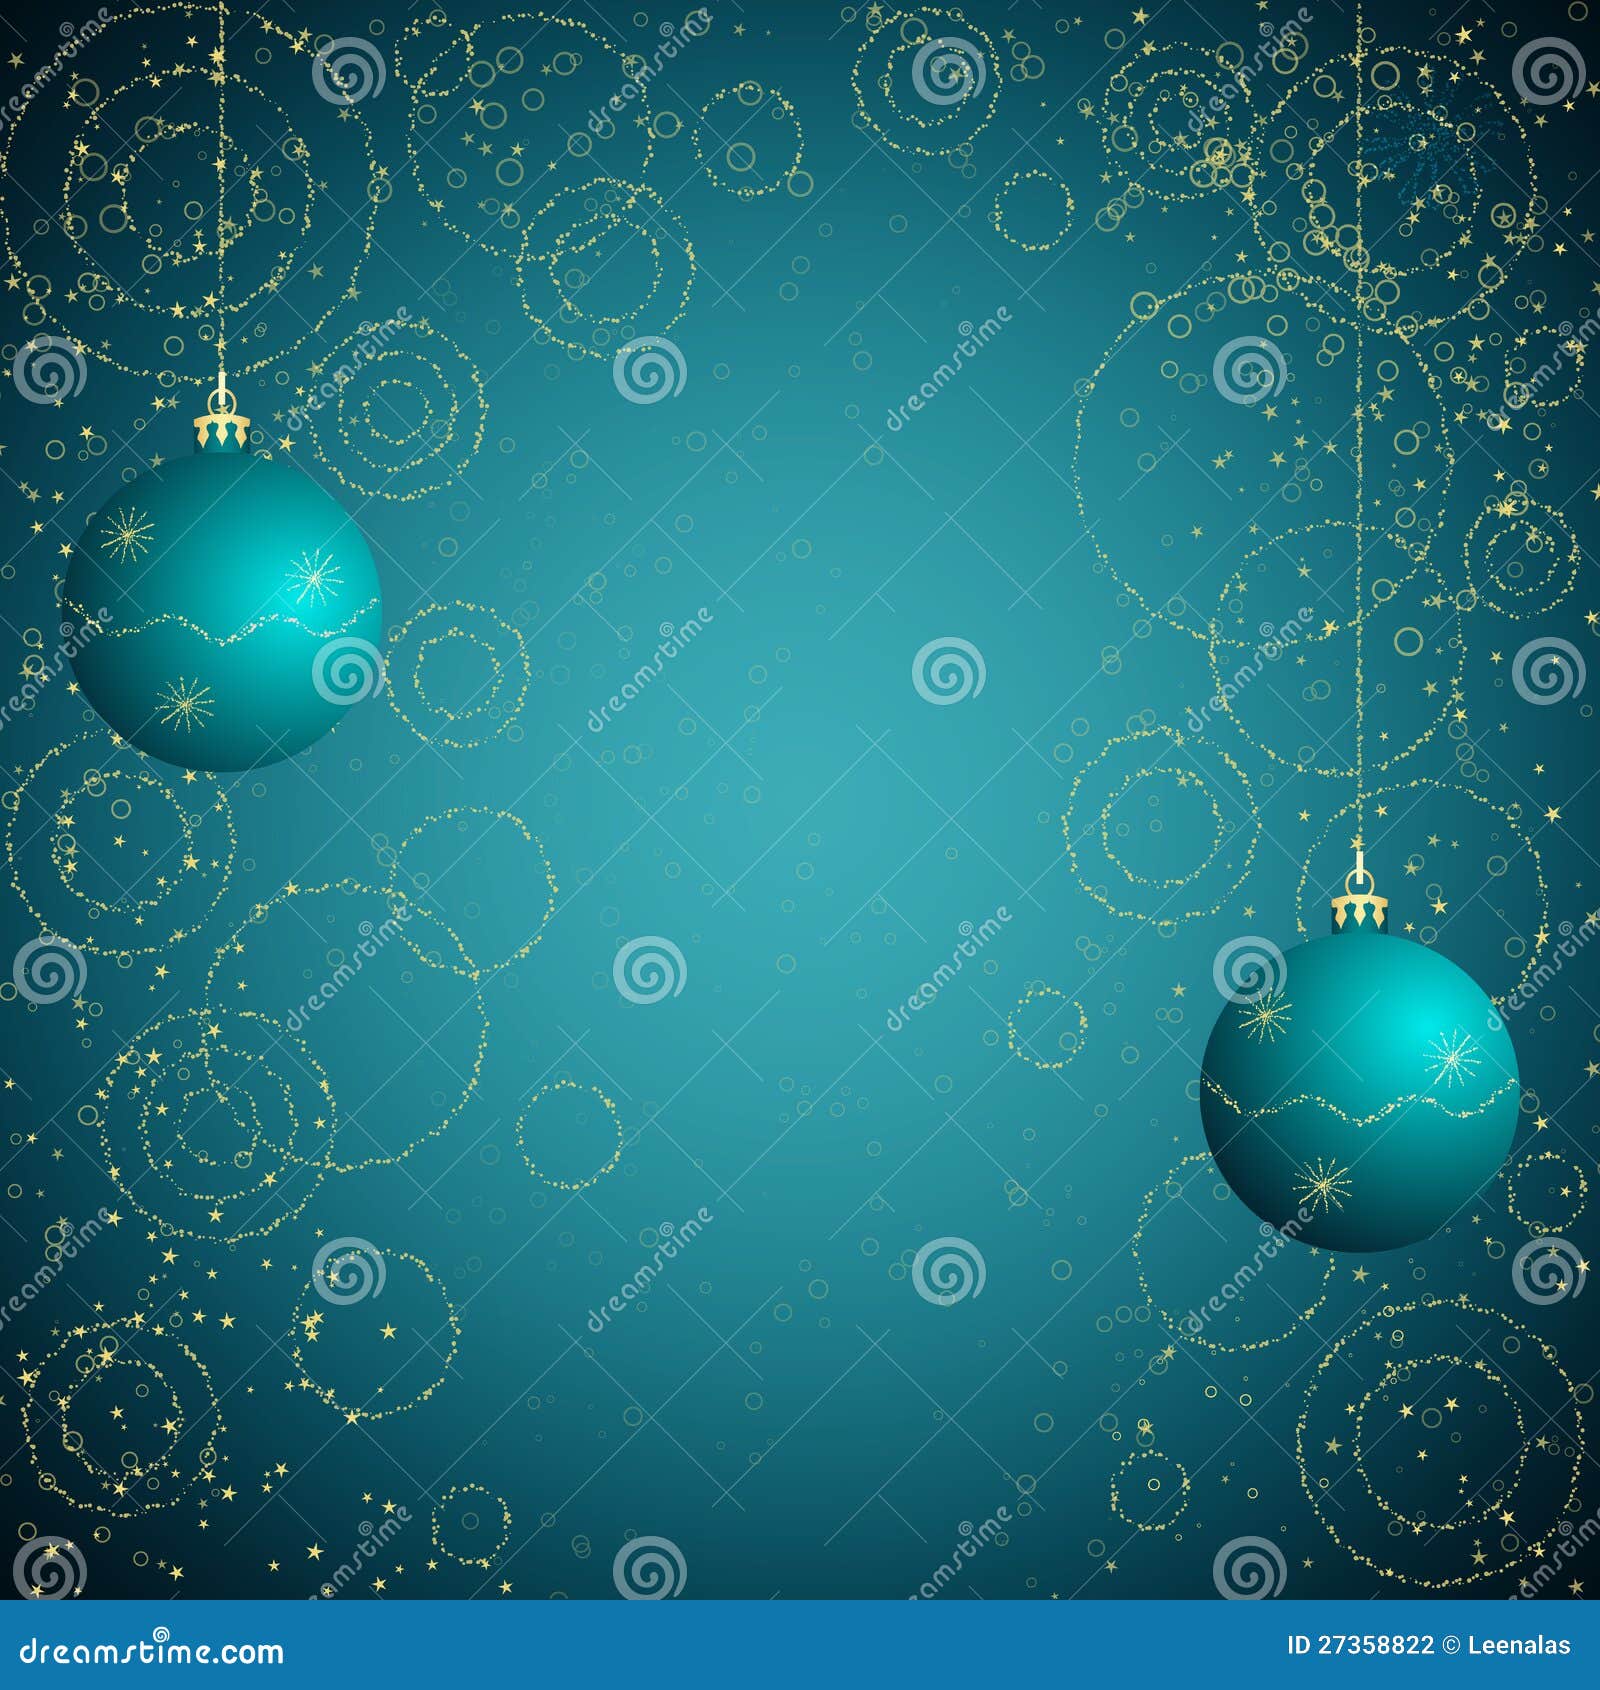 Blue And Golden Christmas Background Stock Illustration - Illustration ...